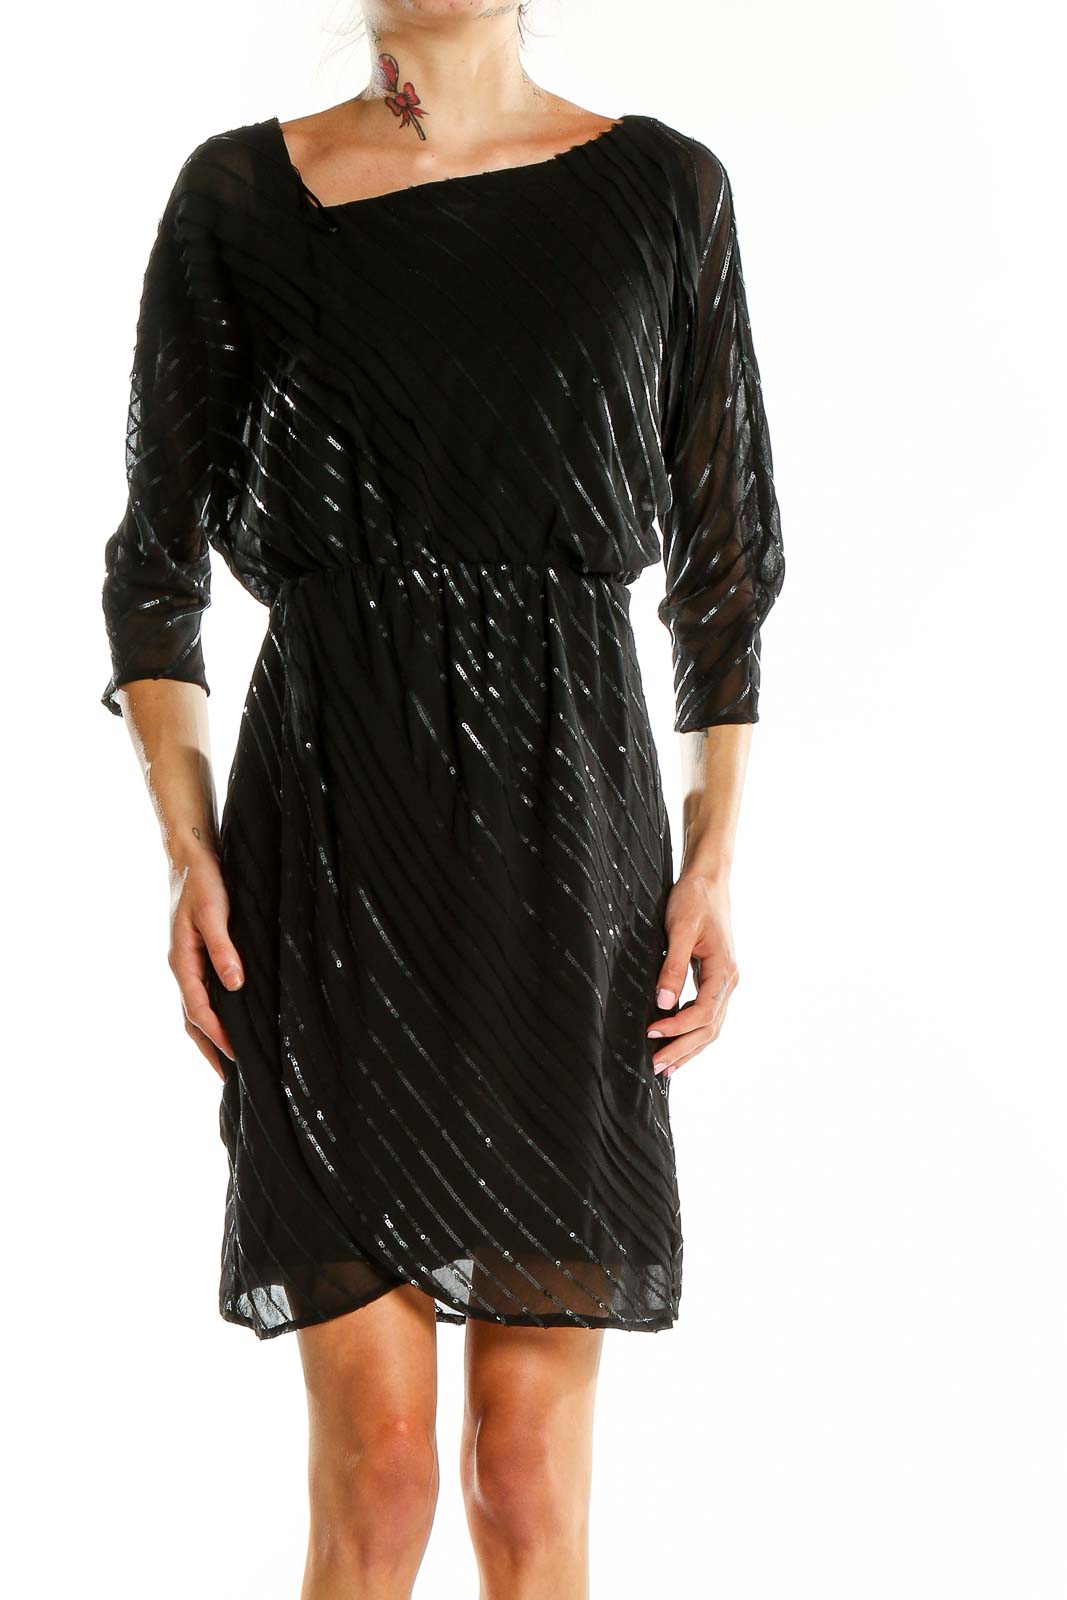 Black Shimmery Dress Front